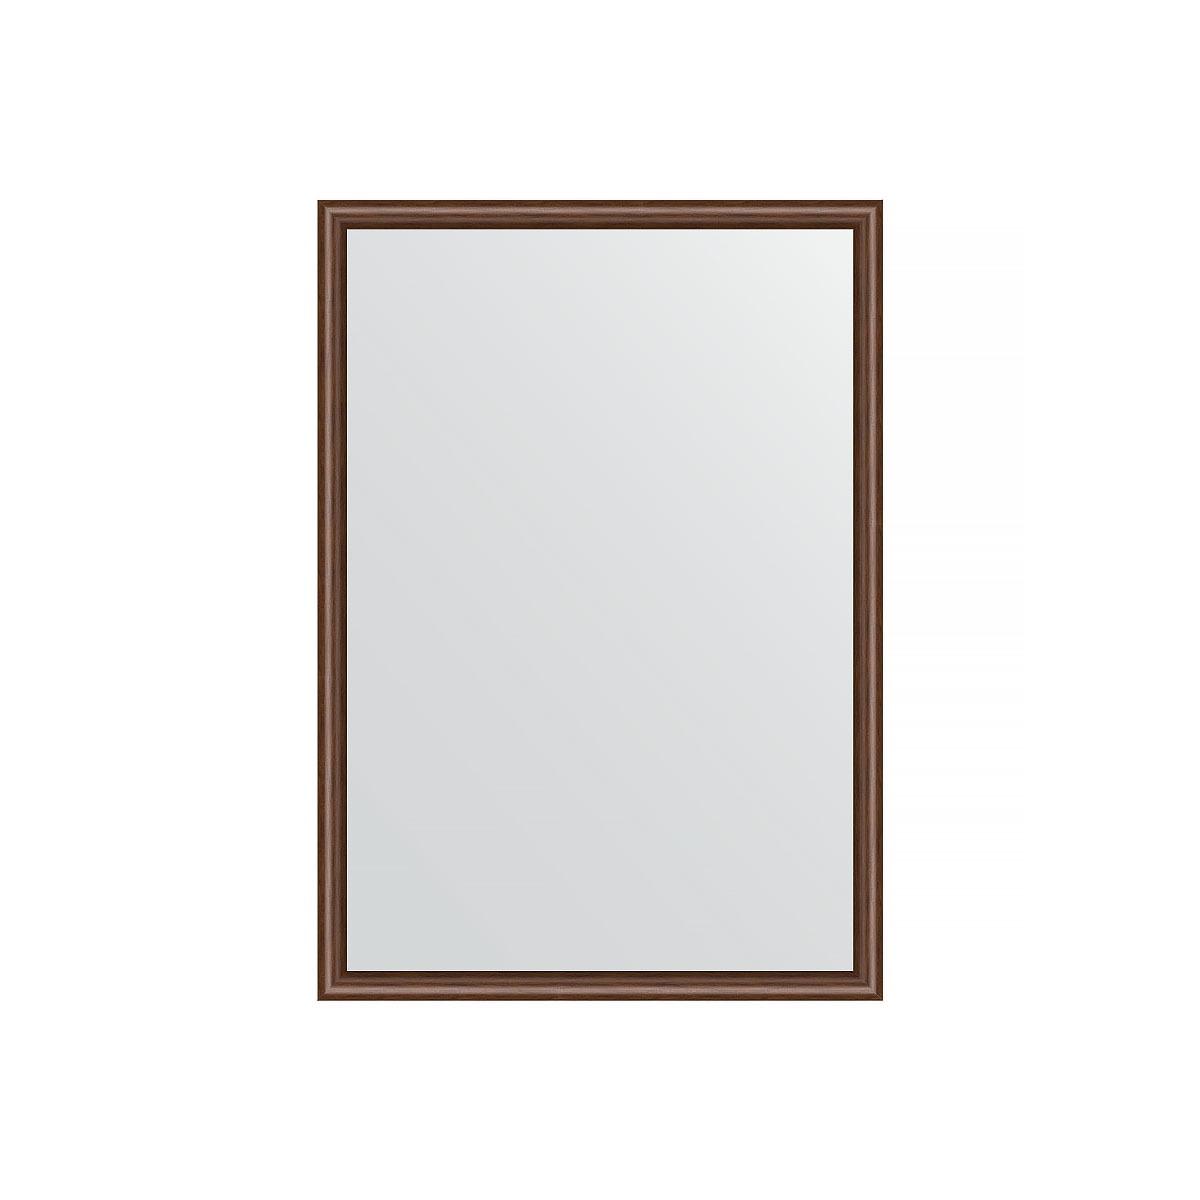 Зеркало в багетной раме Evoform орех 22 мм 48х68 см зеркало 48х68 см махагон evoform definite by 0621